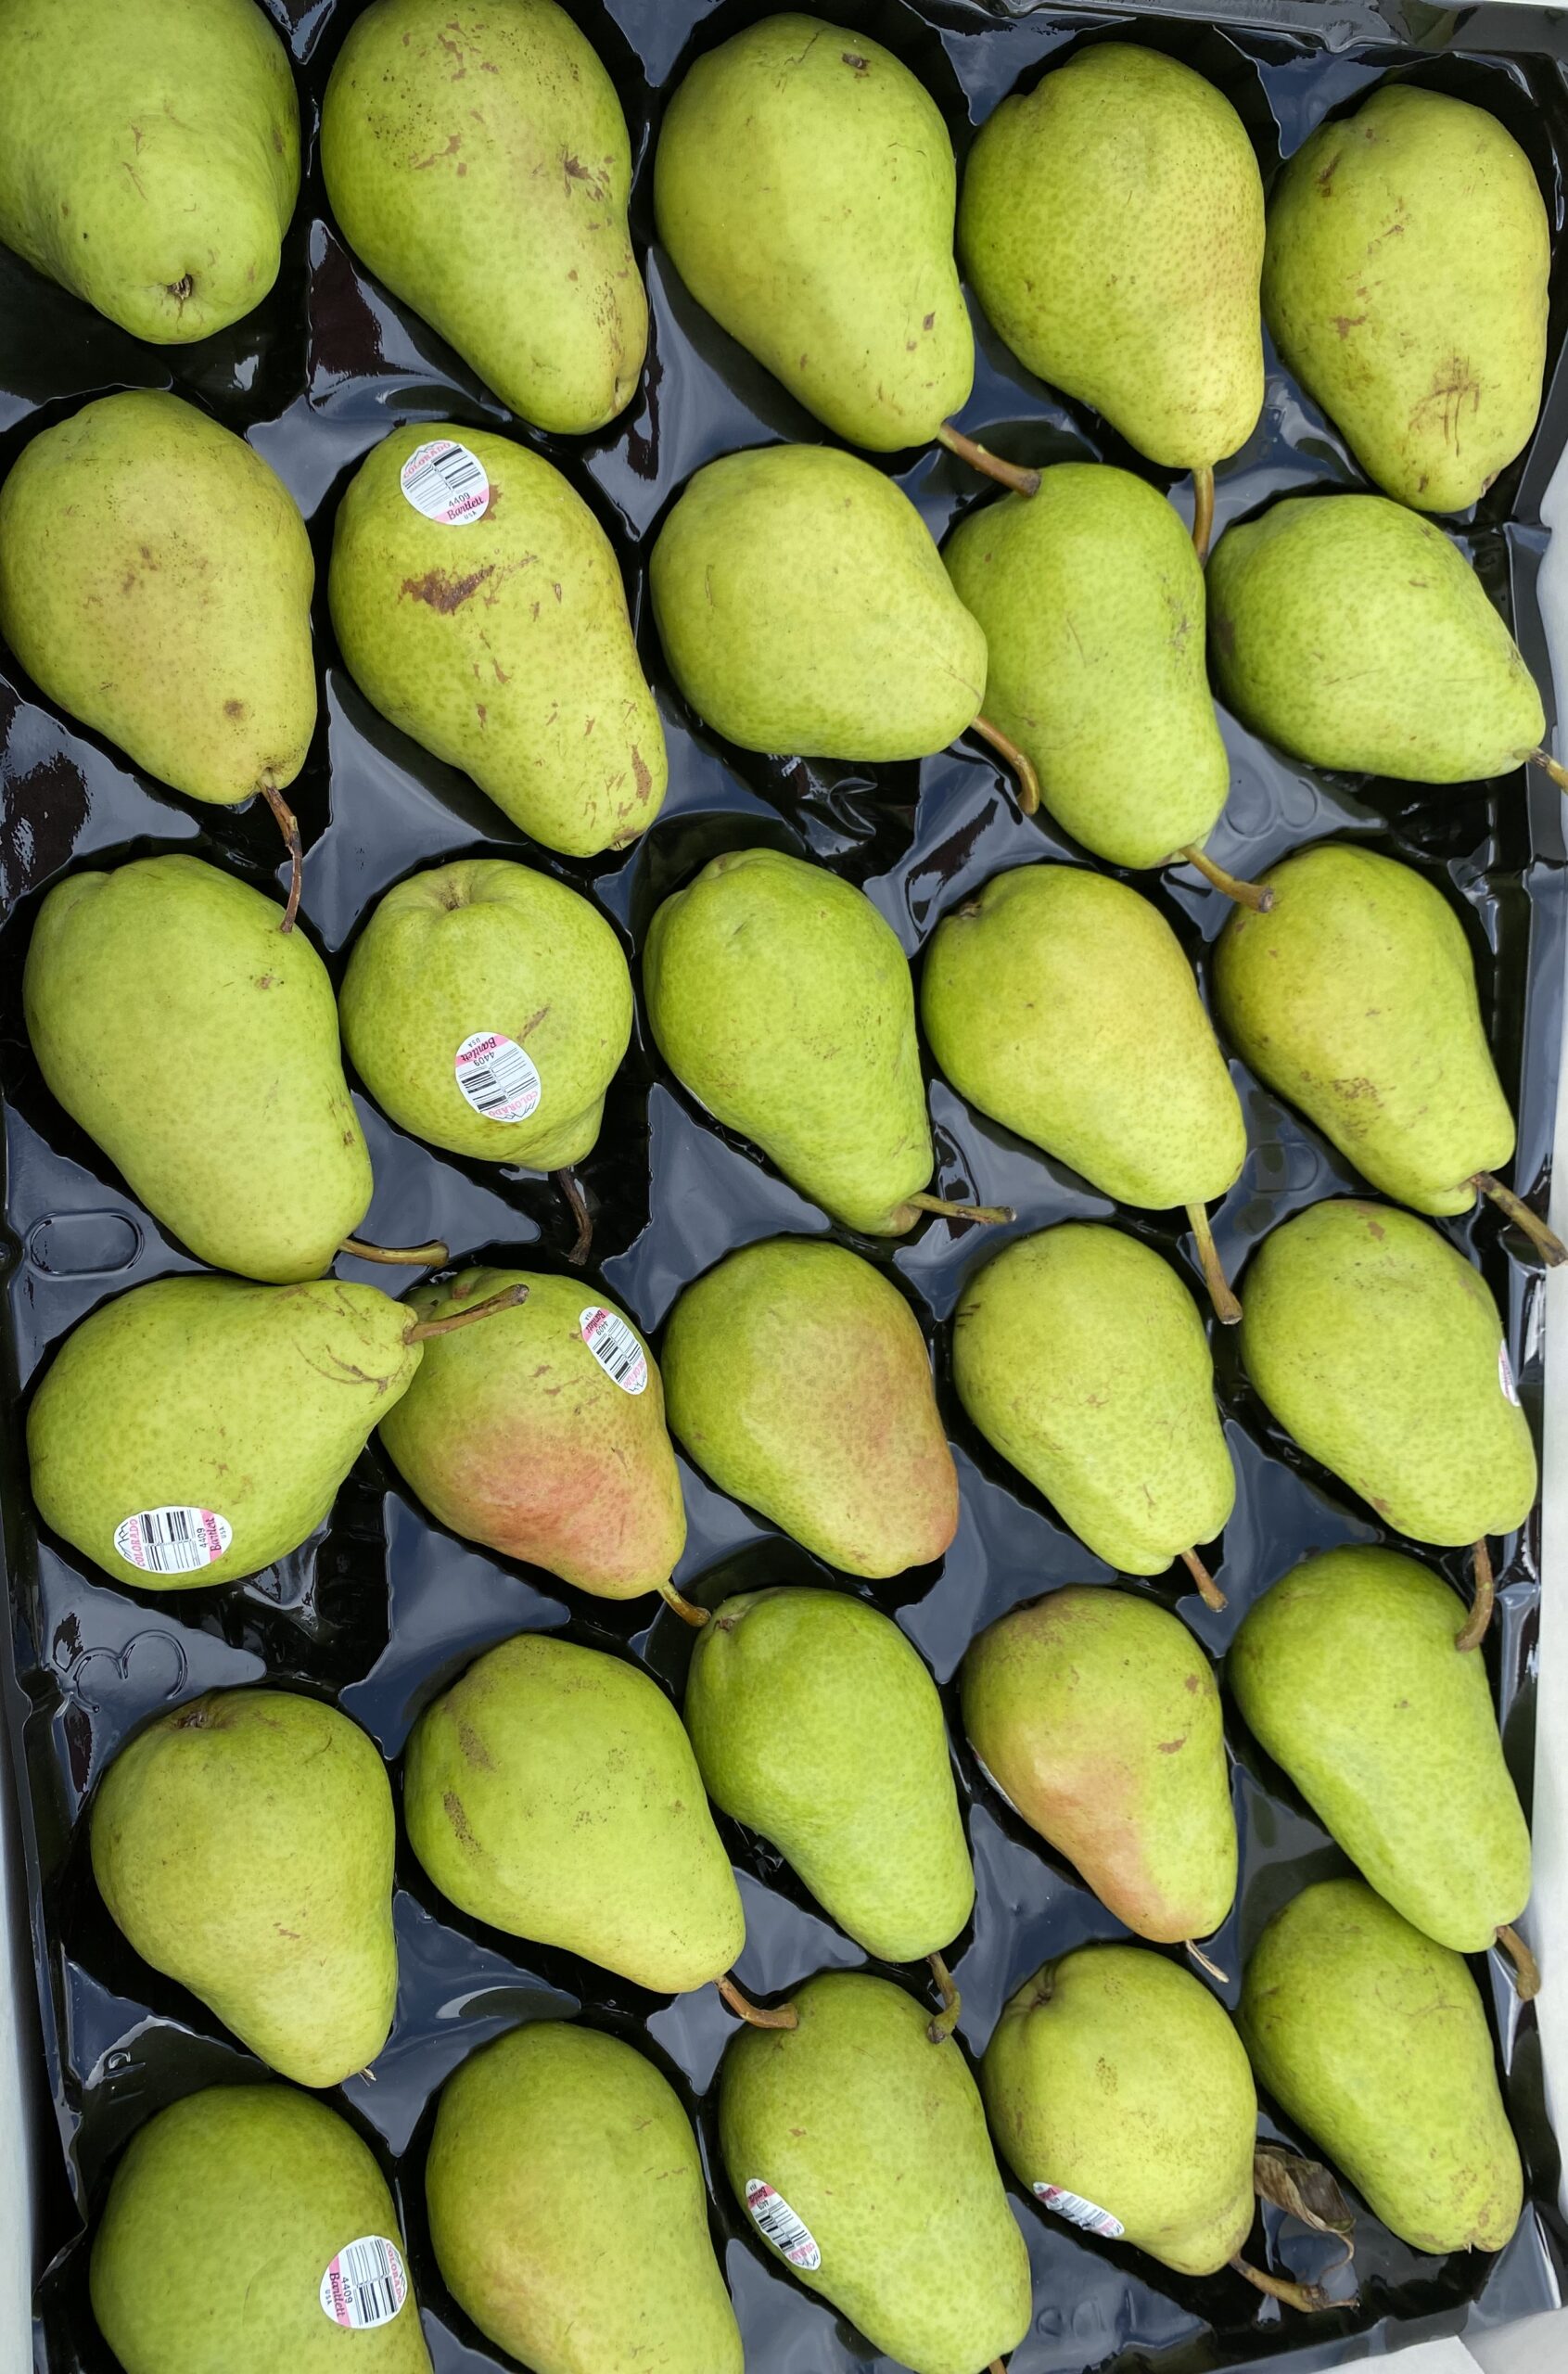 https://yourfreshestfood.com/wp-content/uploads/2021/10/Bartlett-pears-scaled.jpg